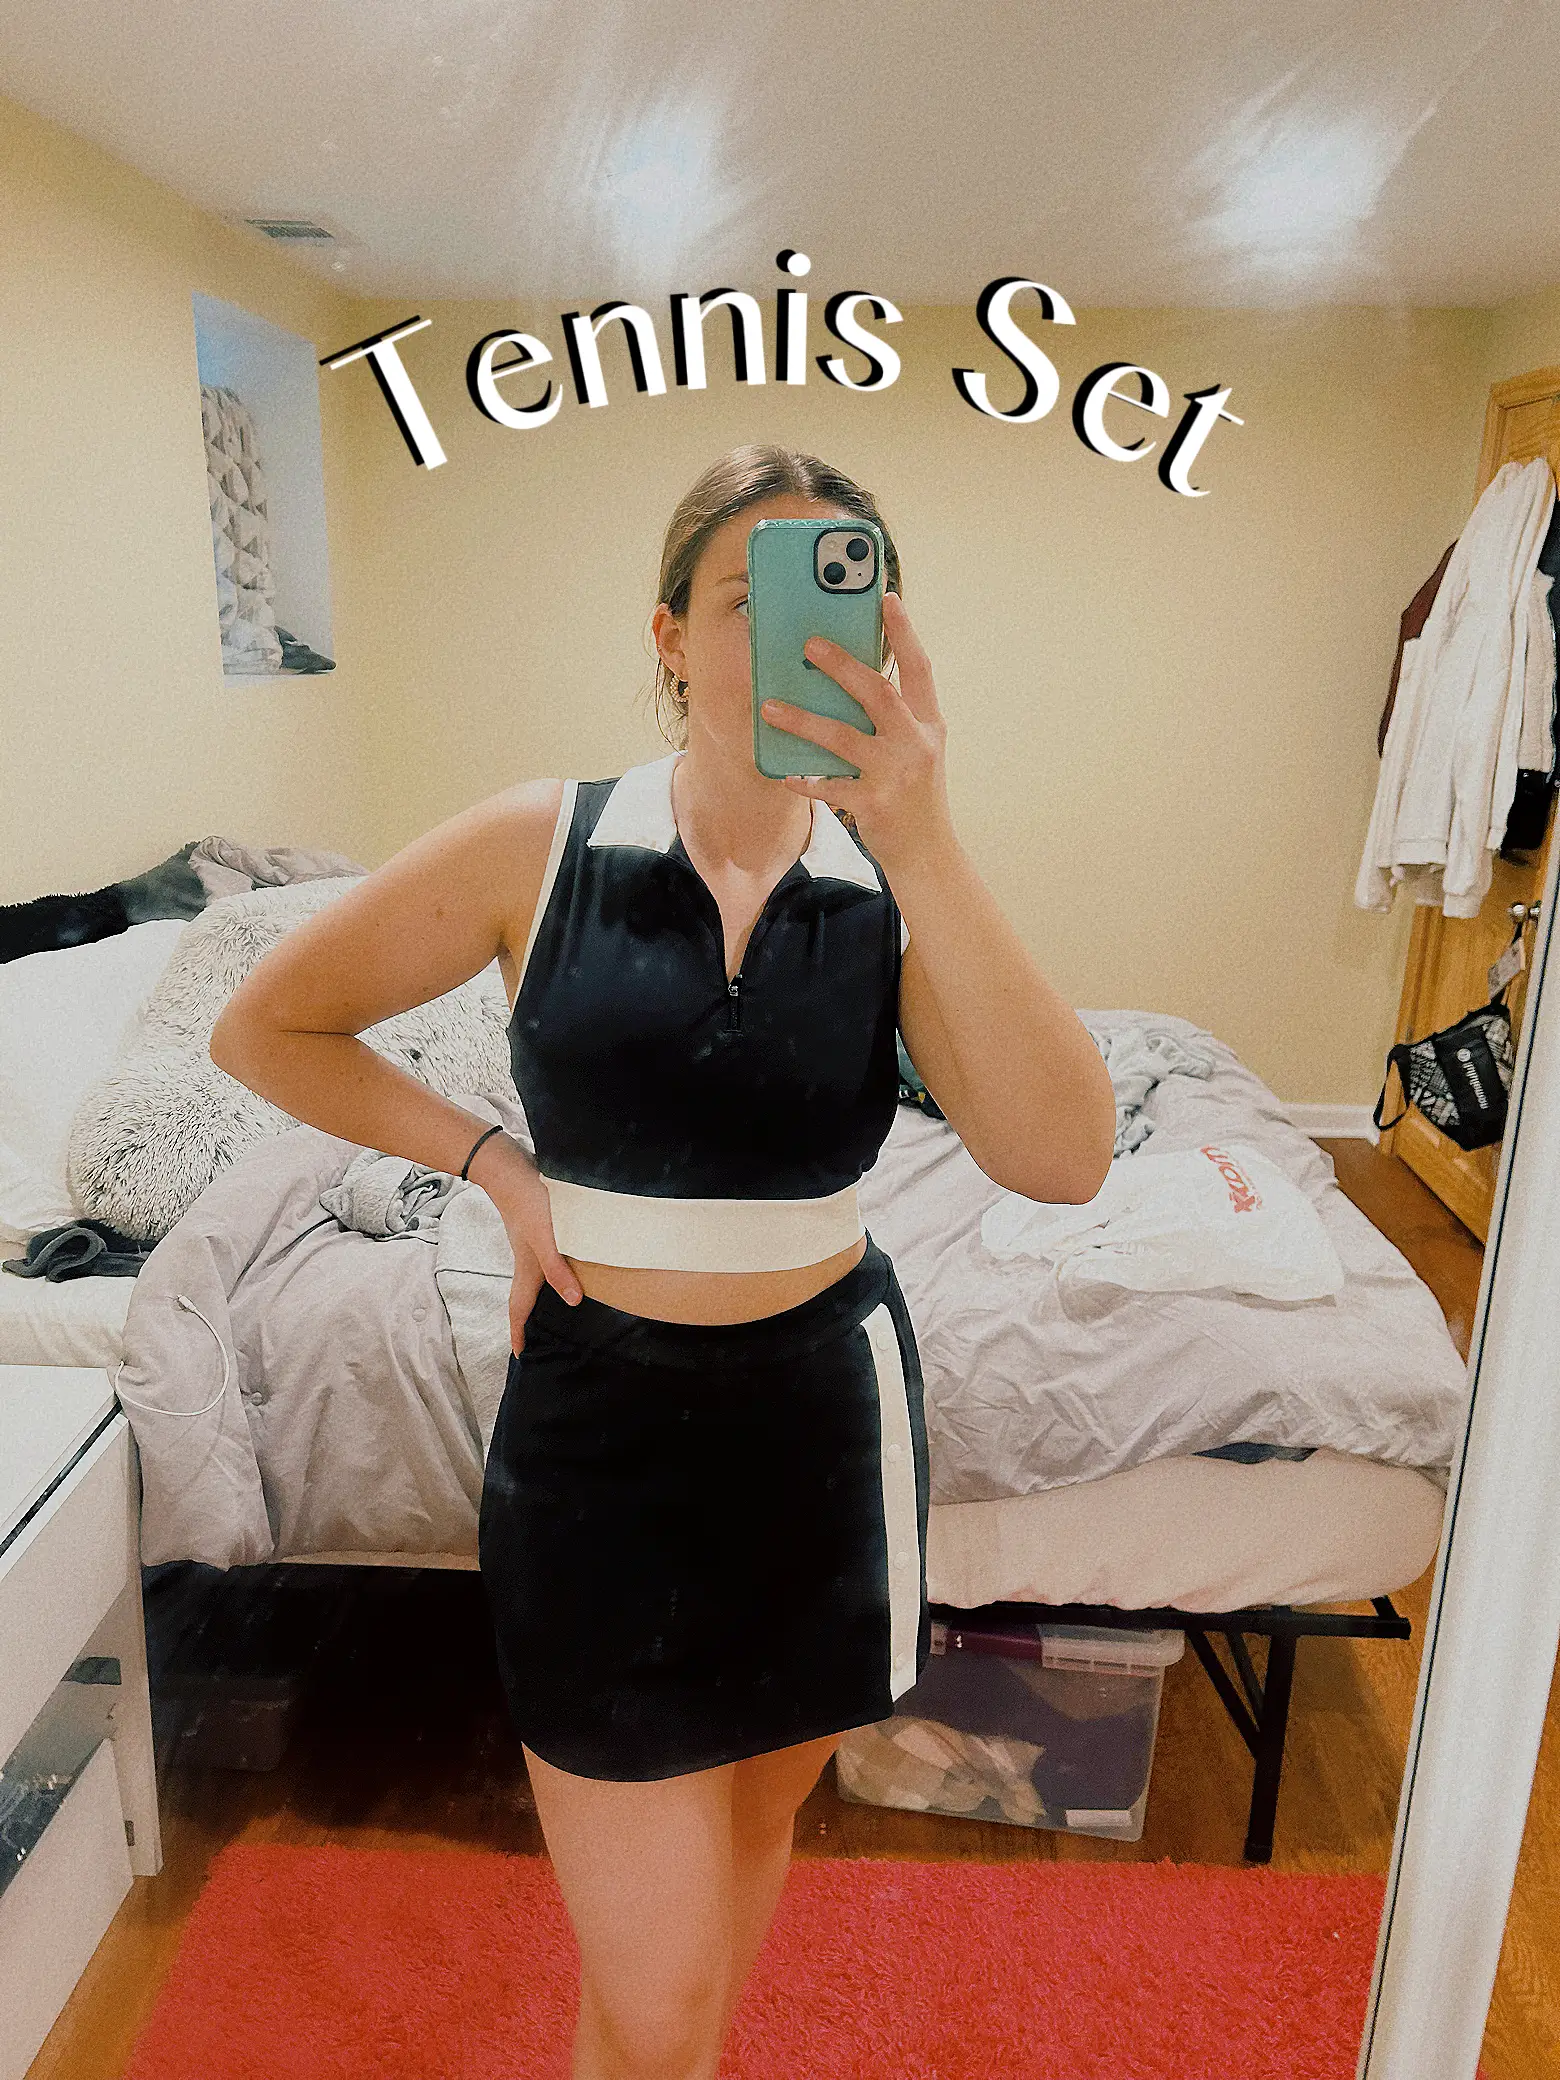 Cute Tennis Set 🎾, Gallery posted by kira bundy